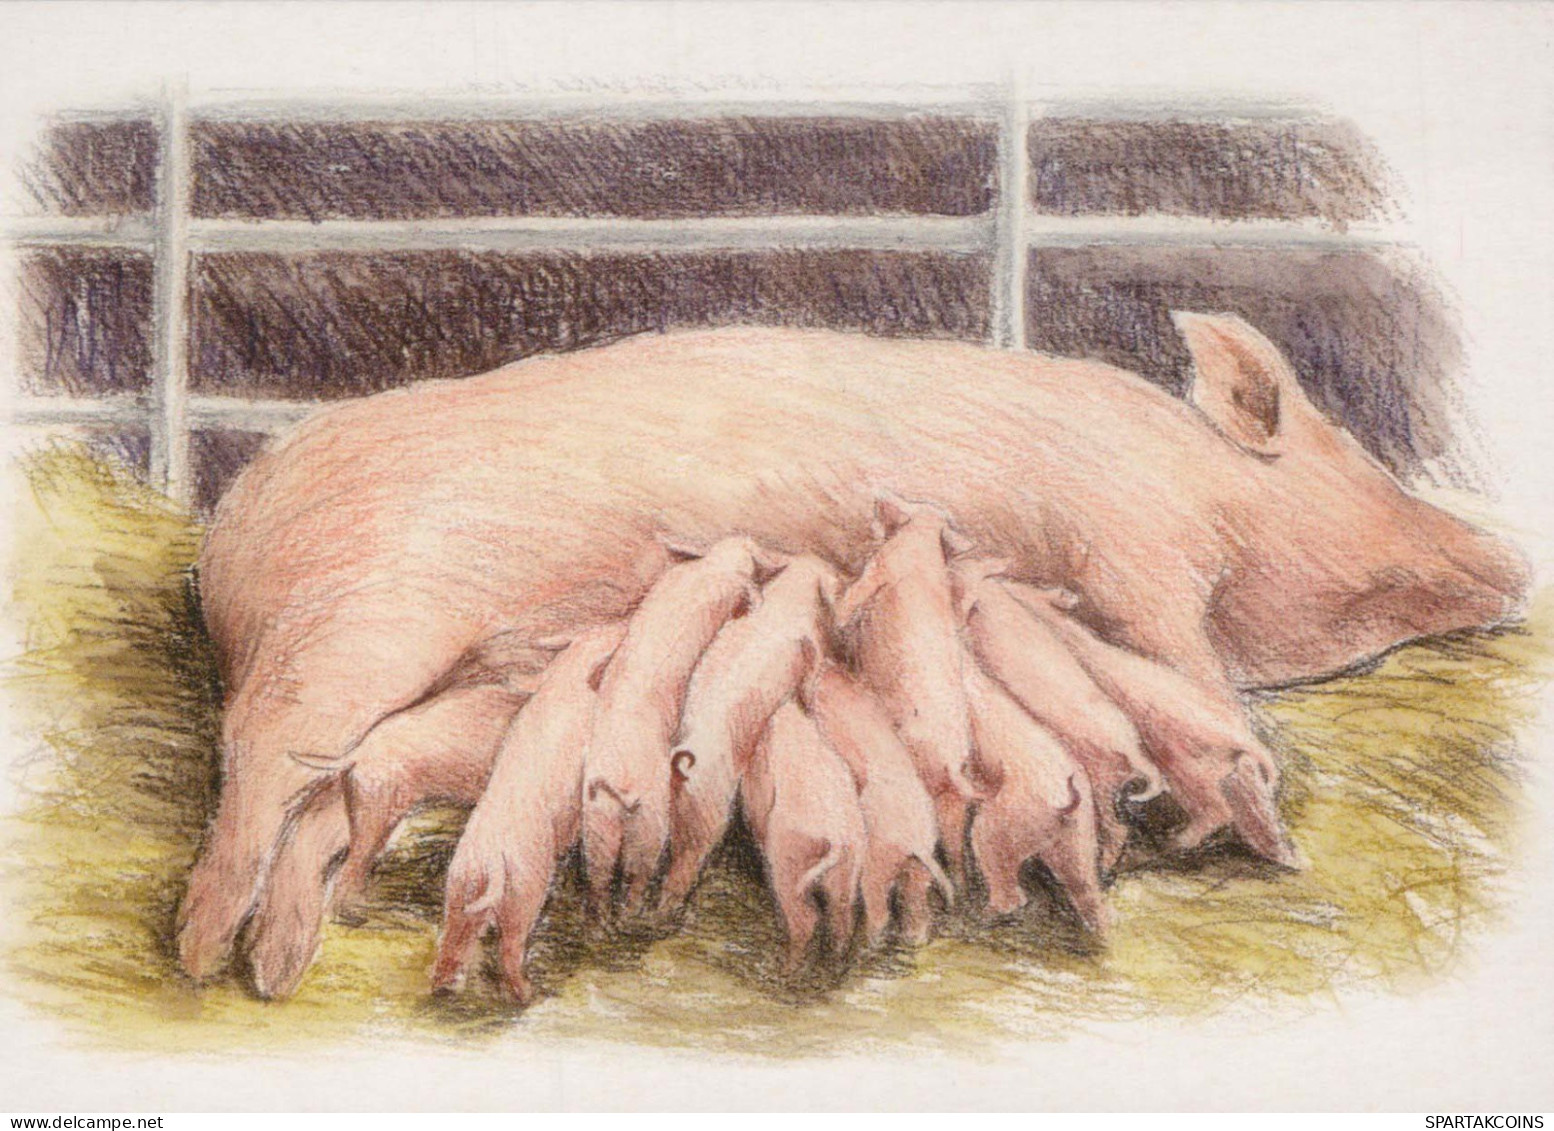 PIGS Animals Vintage Postcard CPSM #PBR759.A - Varkens